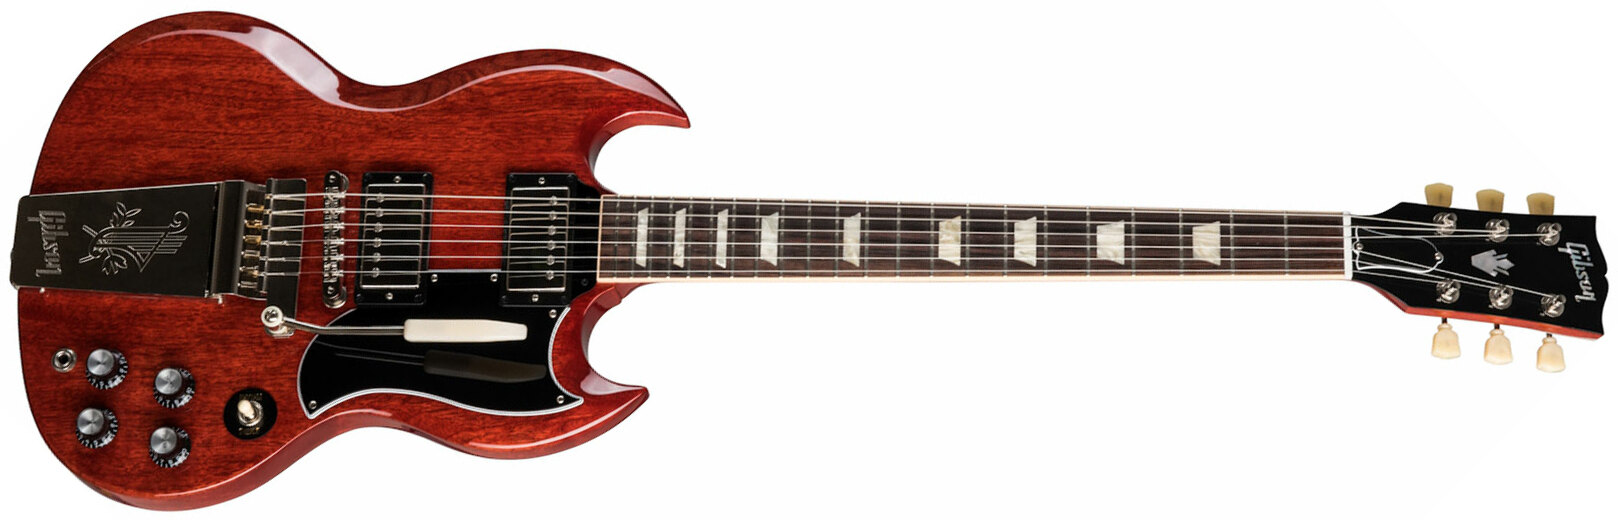 Gibson Sg Standard '61 Maestro Vibrola Original 2h Trem Rw - Guitarra electrica retro rock - Main picture